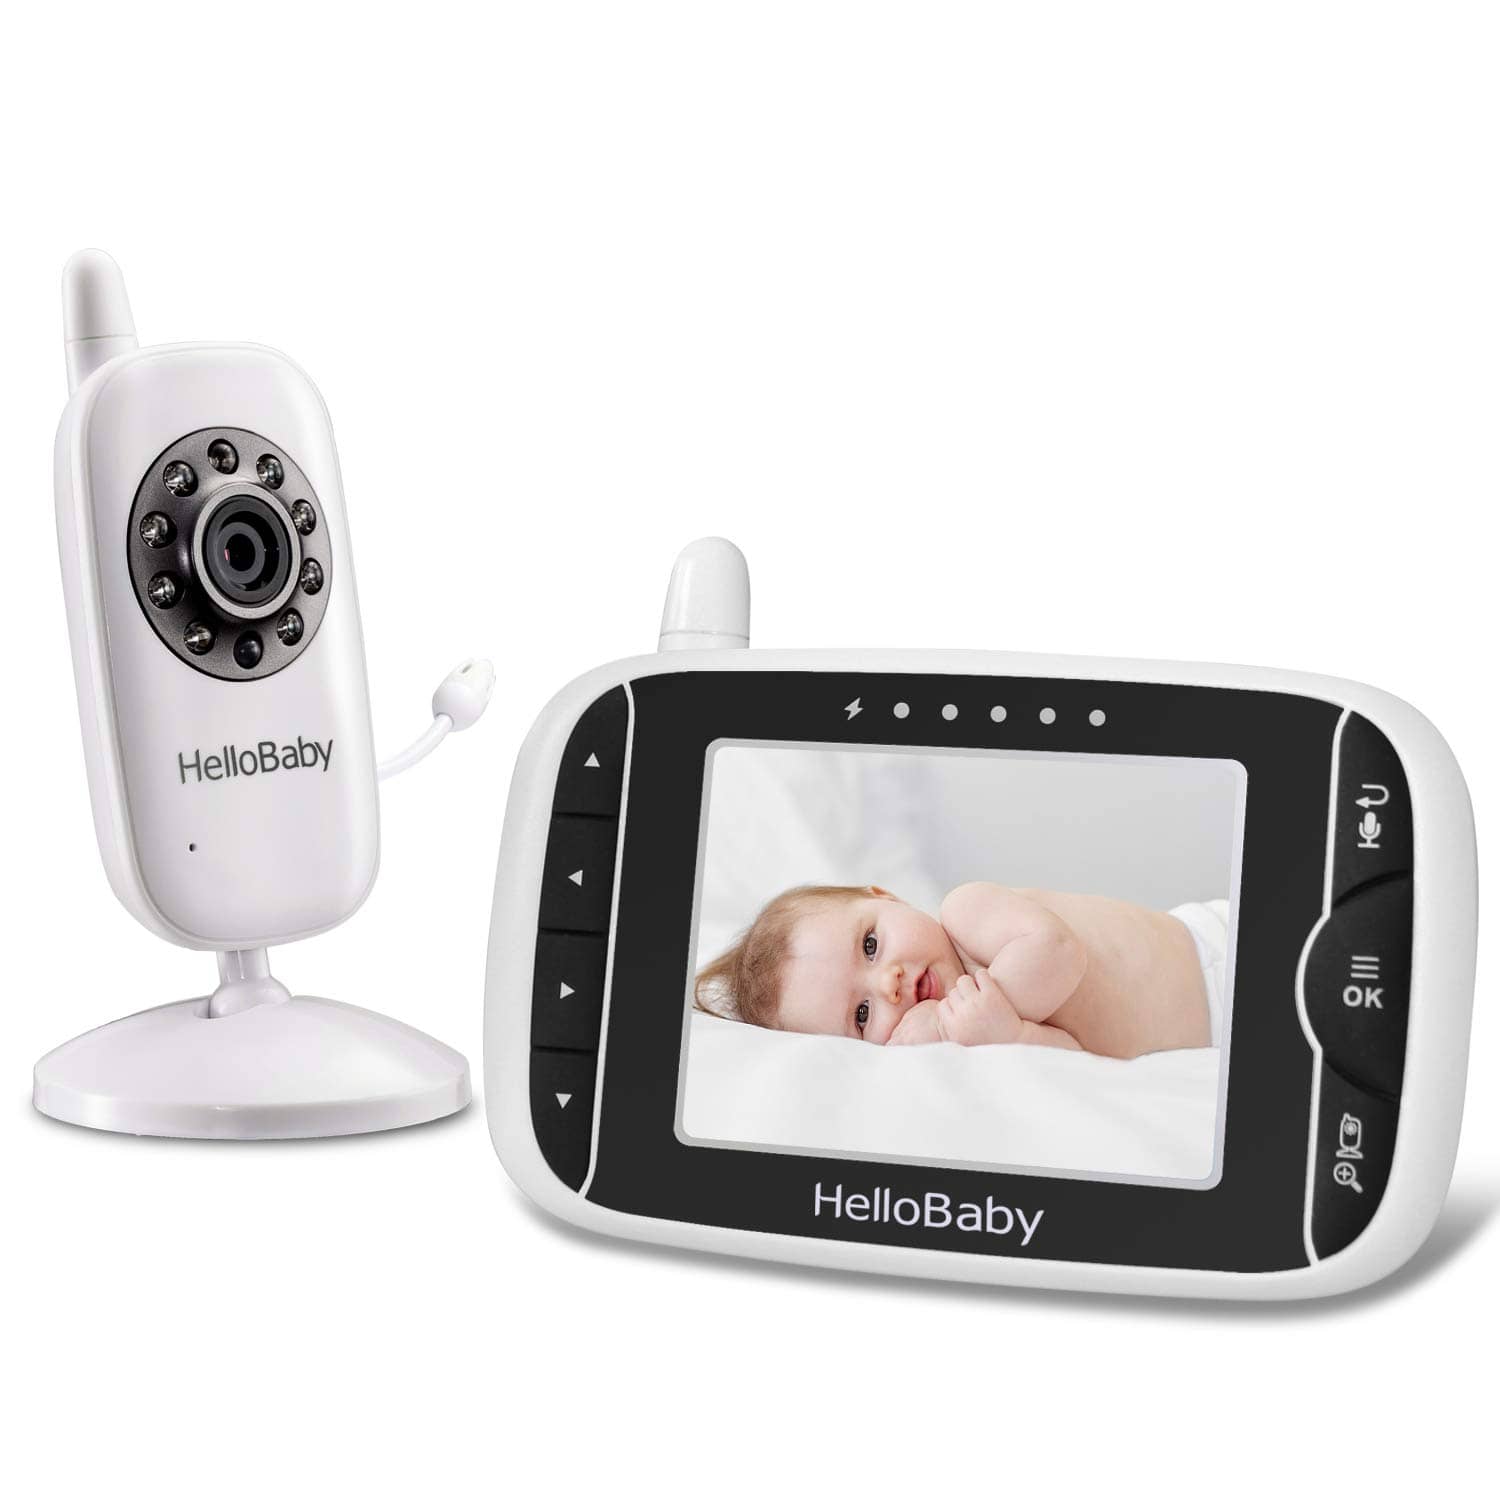  HelloBaby Wireless Video Baby Monitor